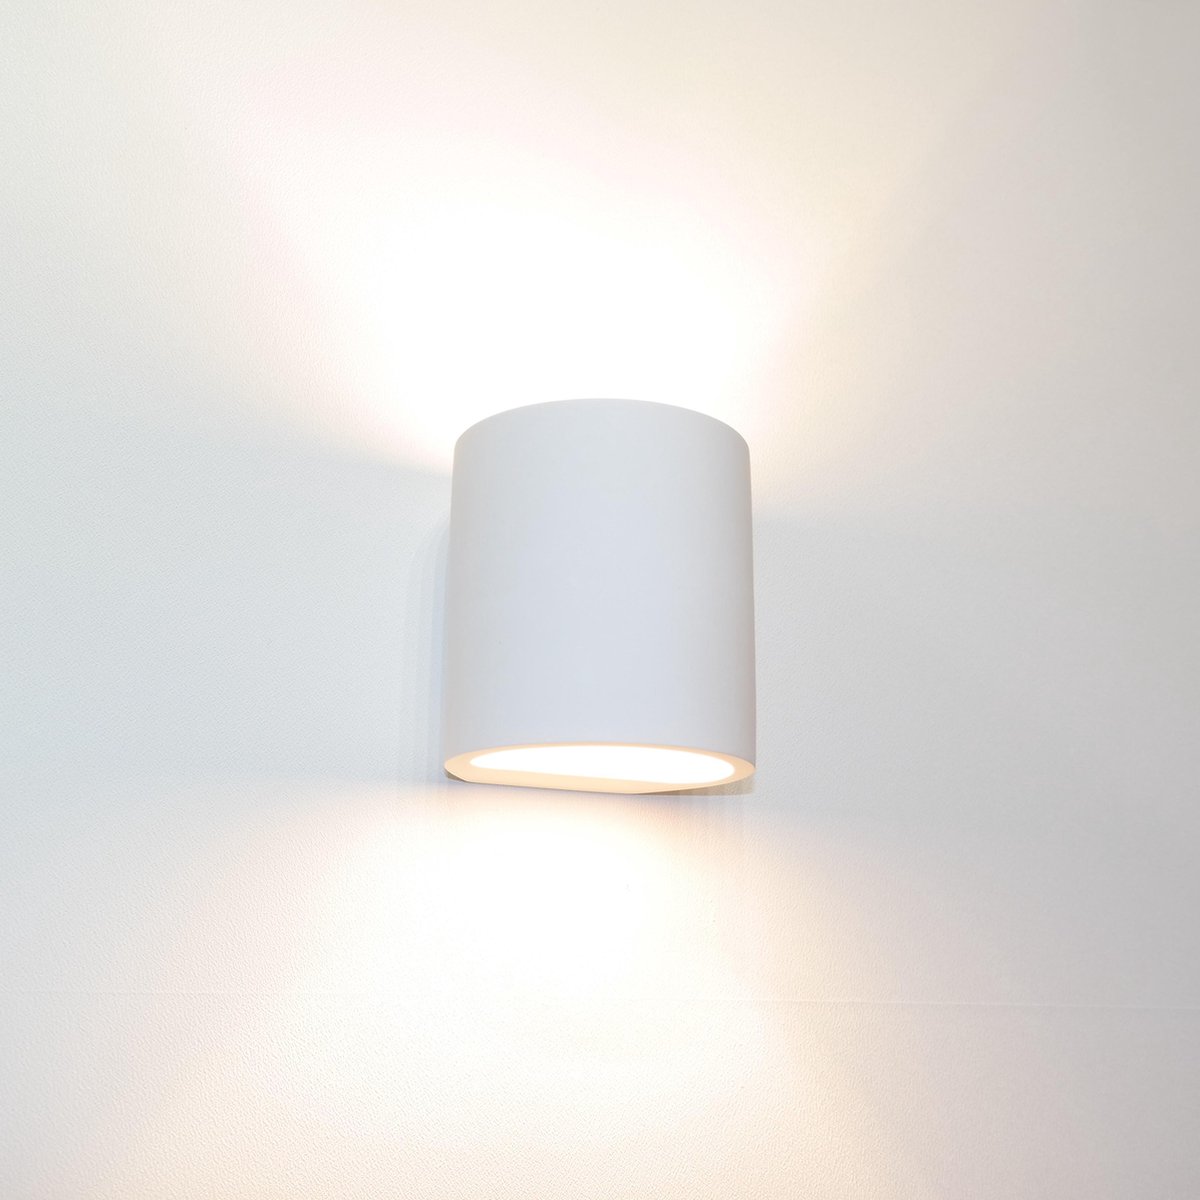 Wandlamp Plaster Rond Wit - Ø11cm - 1x G9 LED 3,5W 2700K 350lm - IP20 - Gips - Overschilderbaar - Dimbaar > wandlamp binnen wit | wandlamp wit | wandlamp overschilderbaar | wandlamp gips | muurlamp wit | led lamp wit | sfeer lamp wit